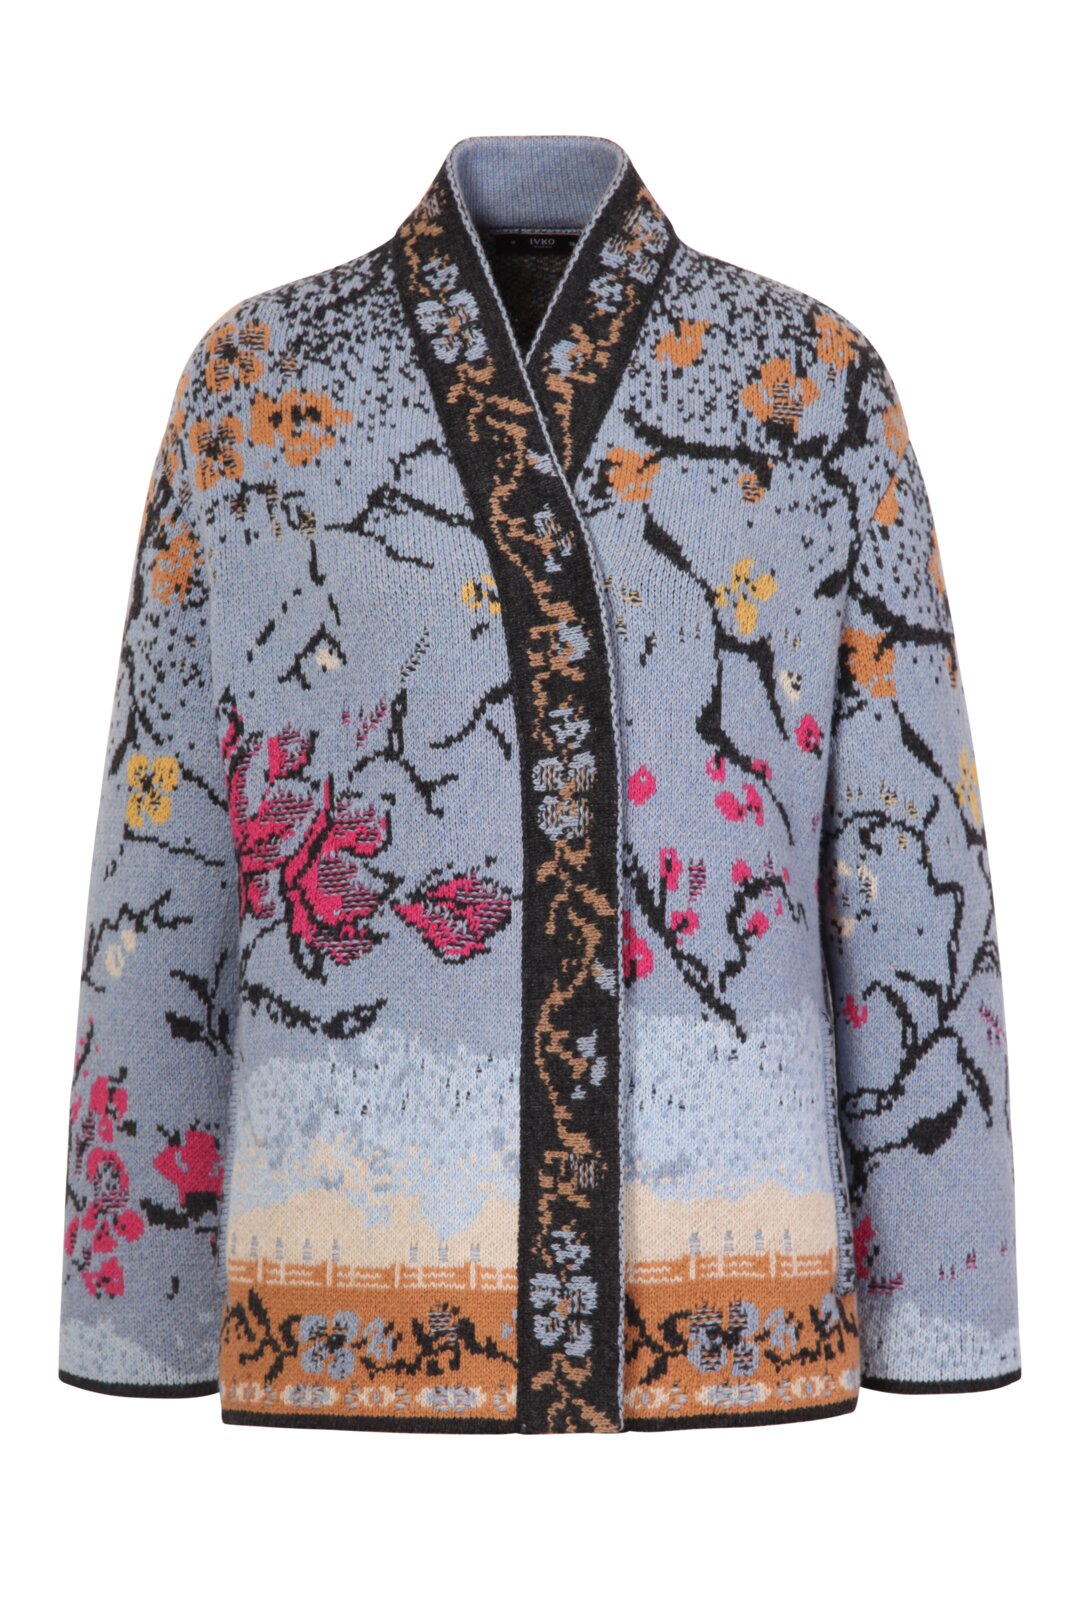 Jacquard Jacket, Cherry Blossom Pattern